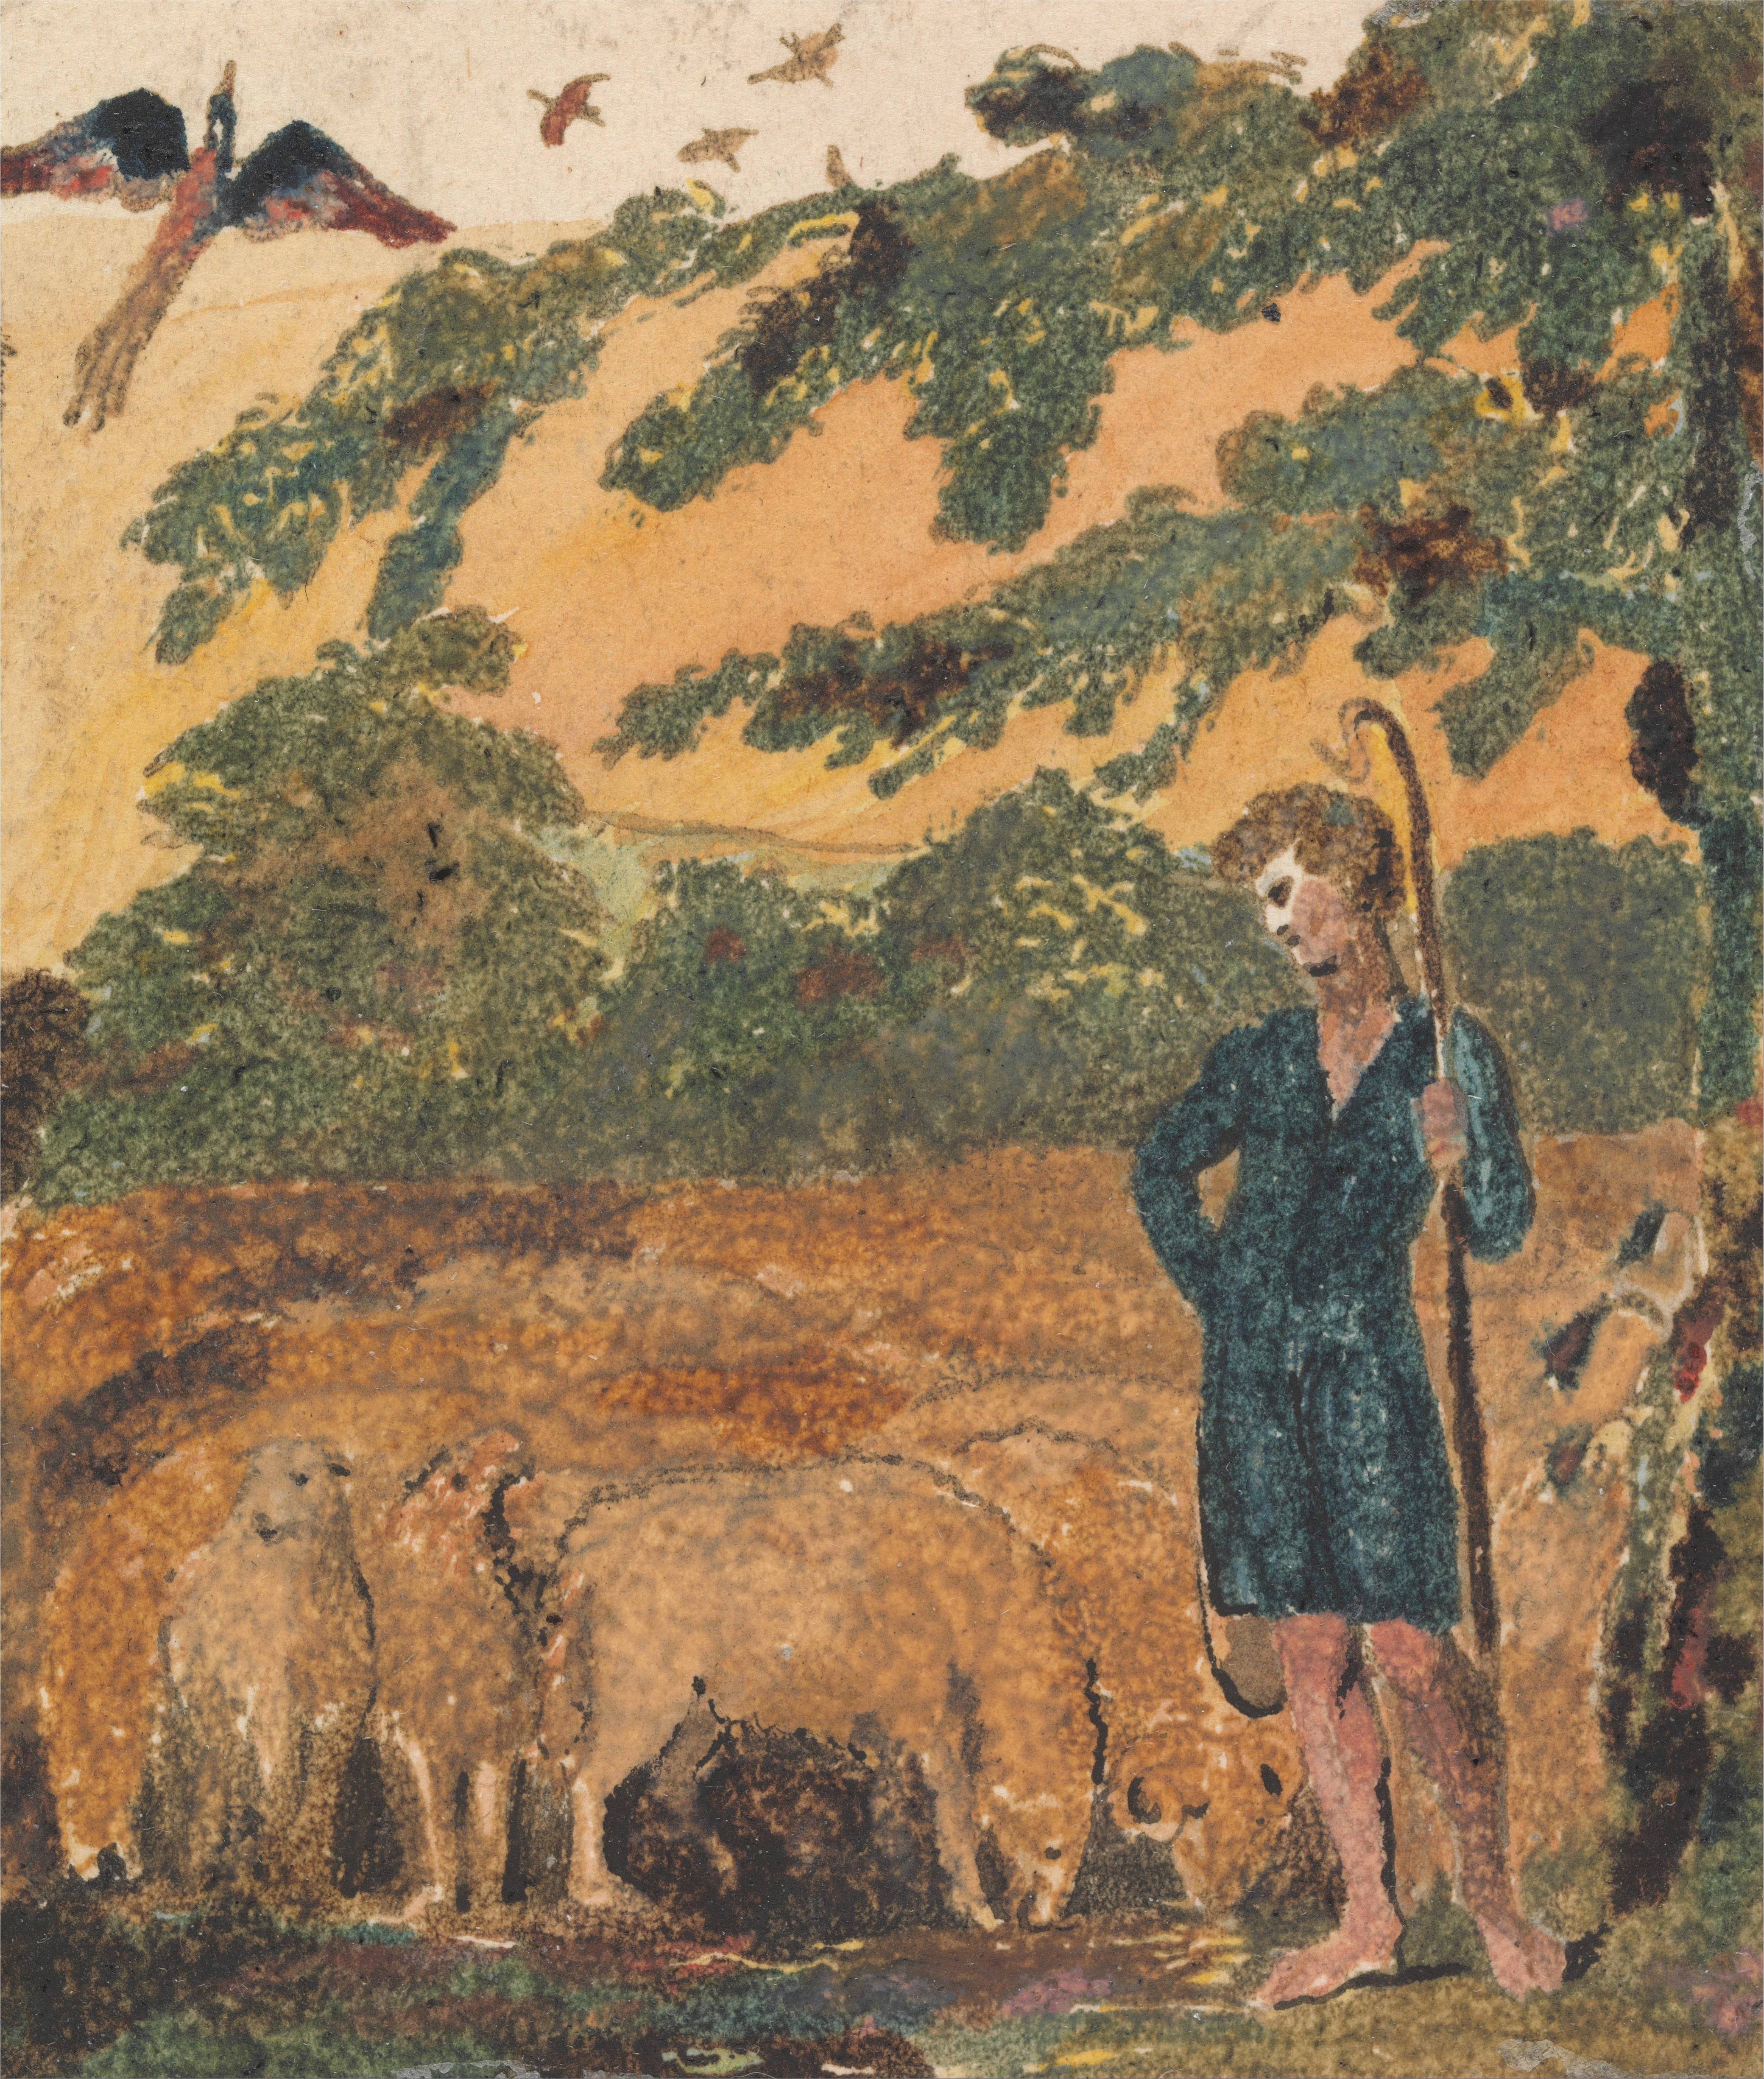 William Blake - The Shepherd, from Songs of Innocence - Google Art Project